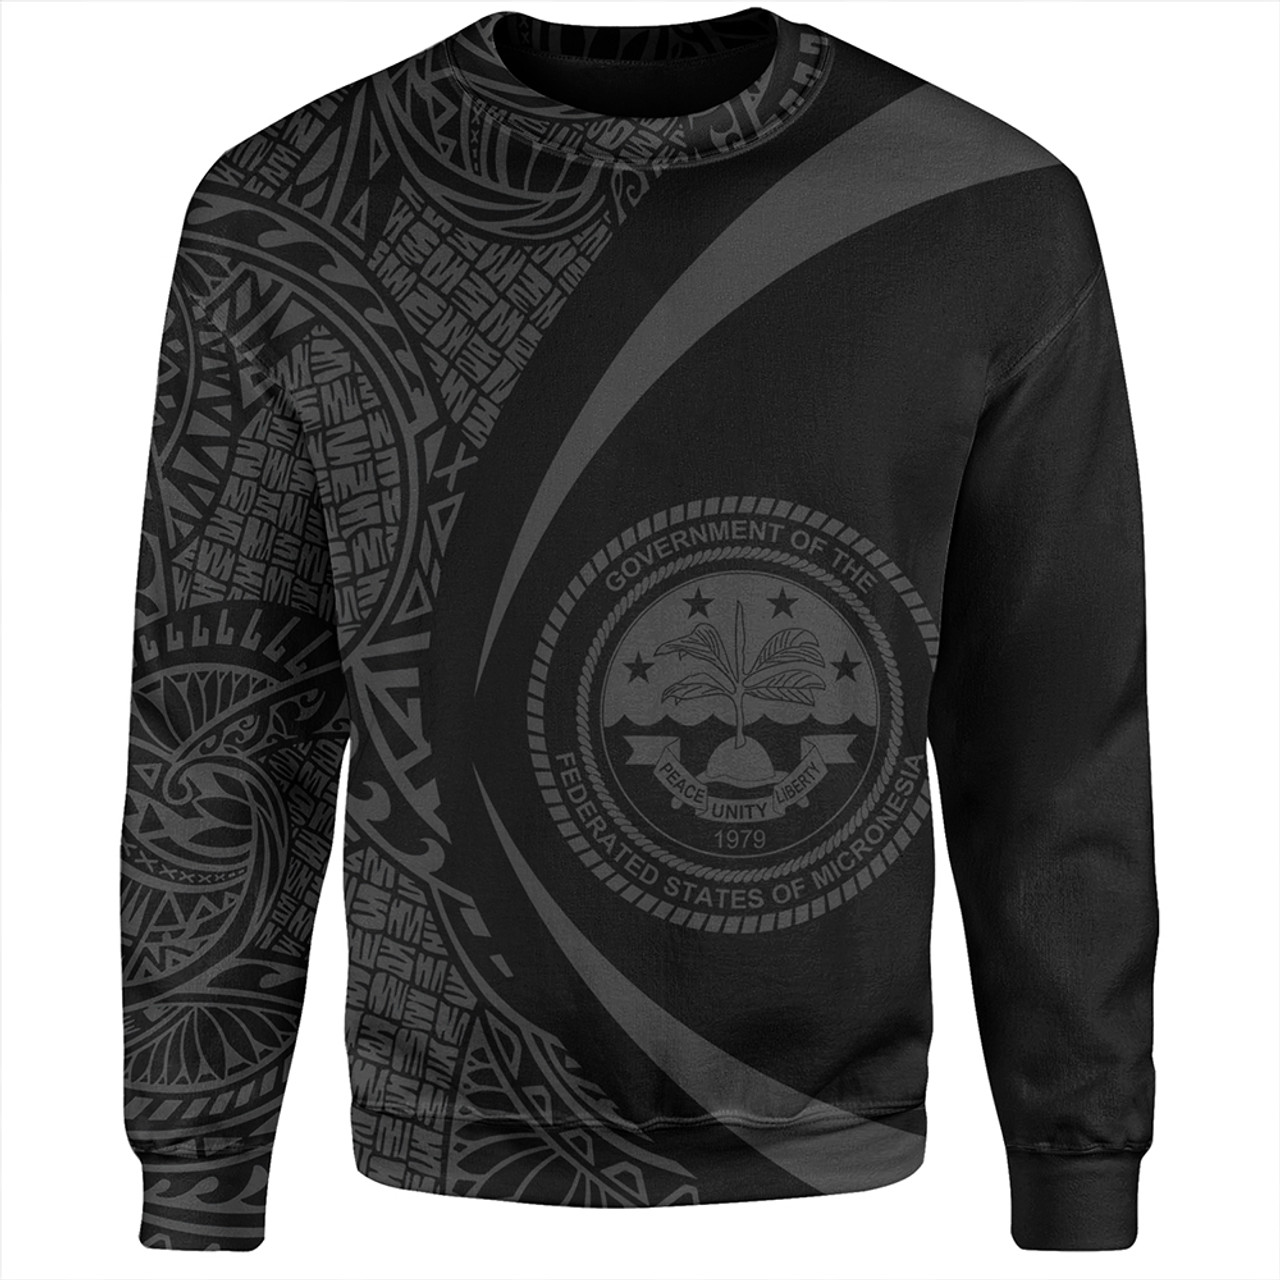 Federated States of Micronesia Sweatshirt Coat Of Arm Lauhala Gray Circle